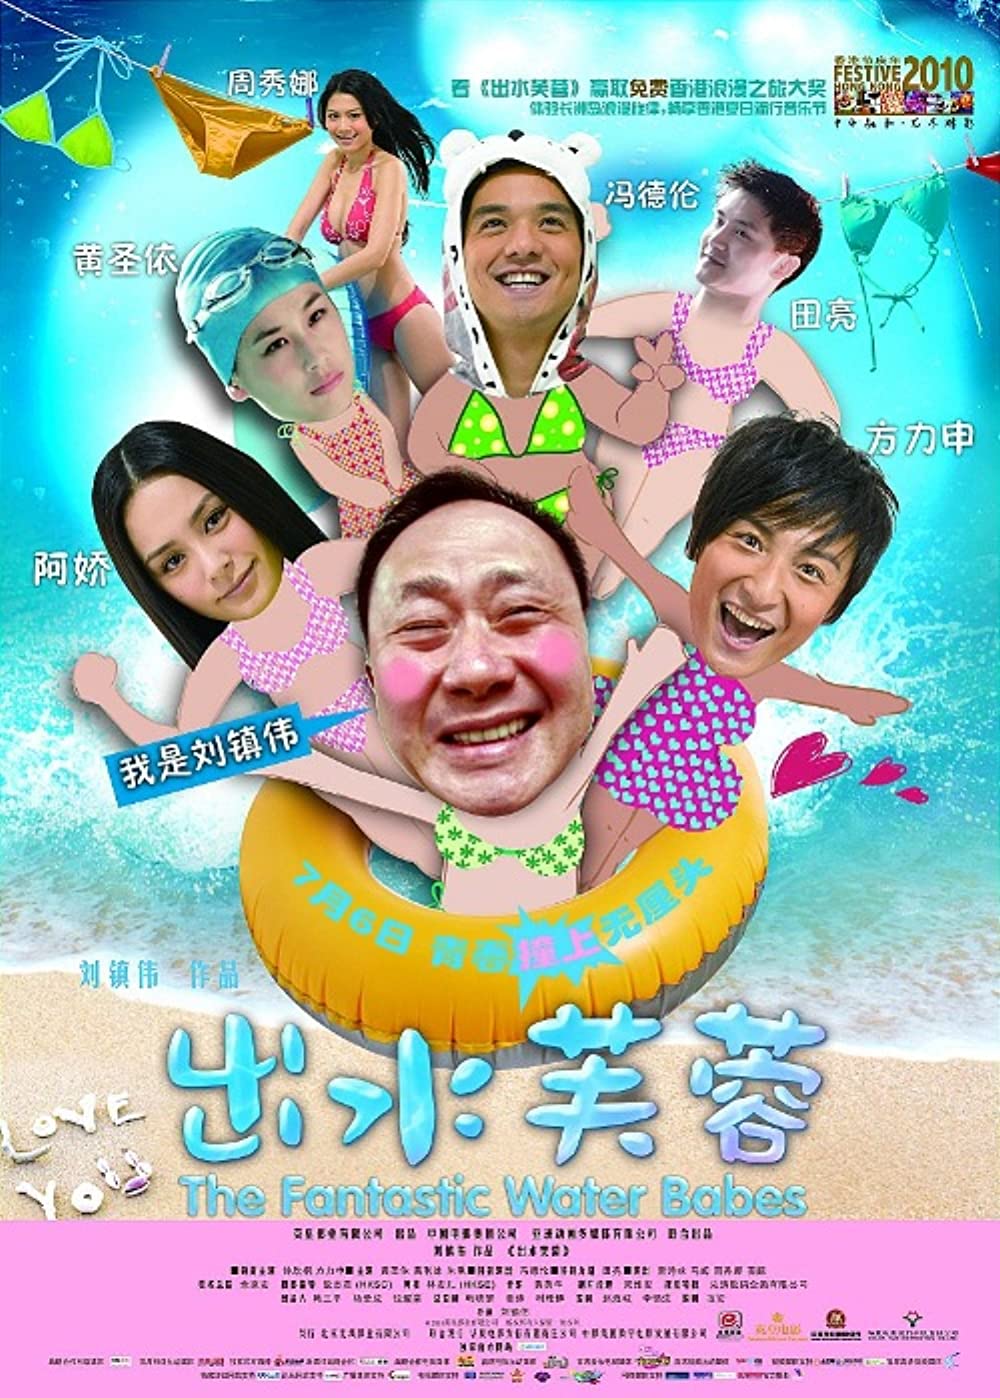 Download Chut sui fu yung Movie | Chut Sui Fu Yung Download